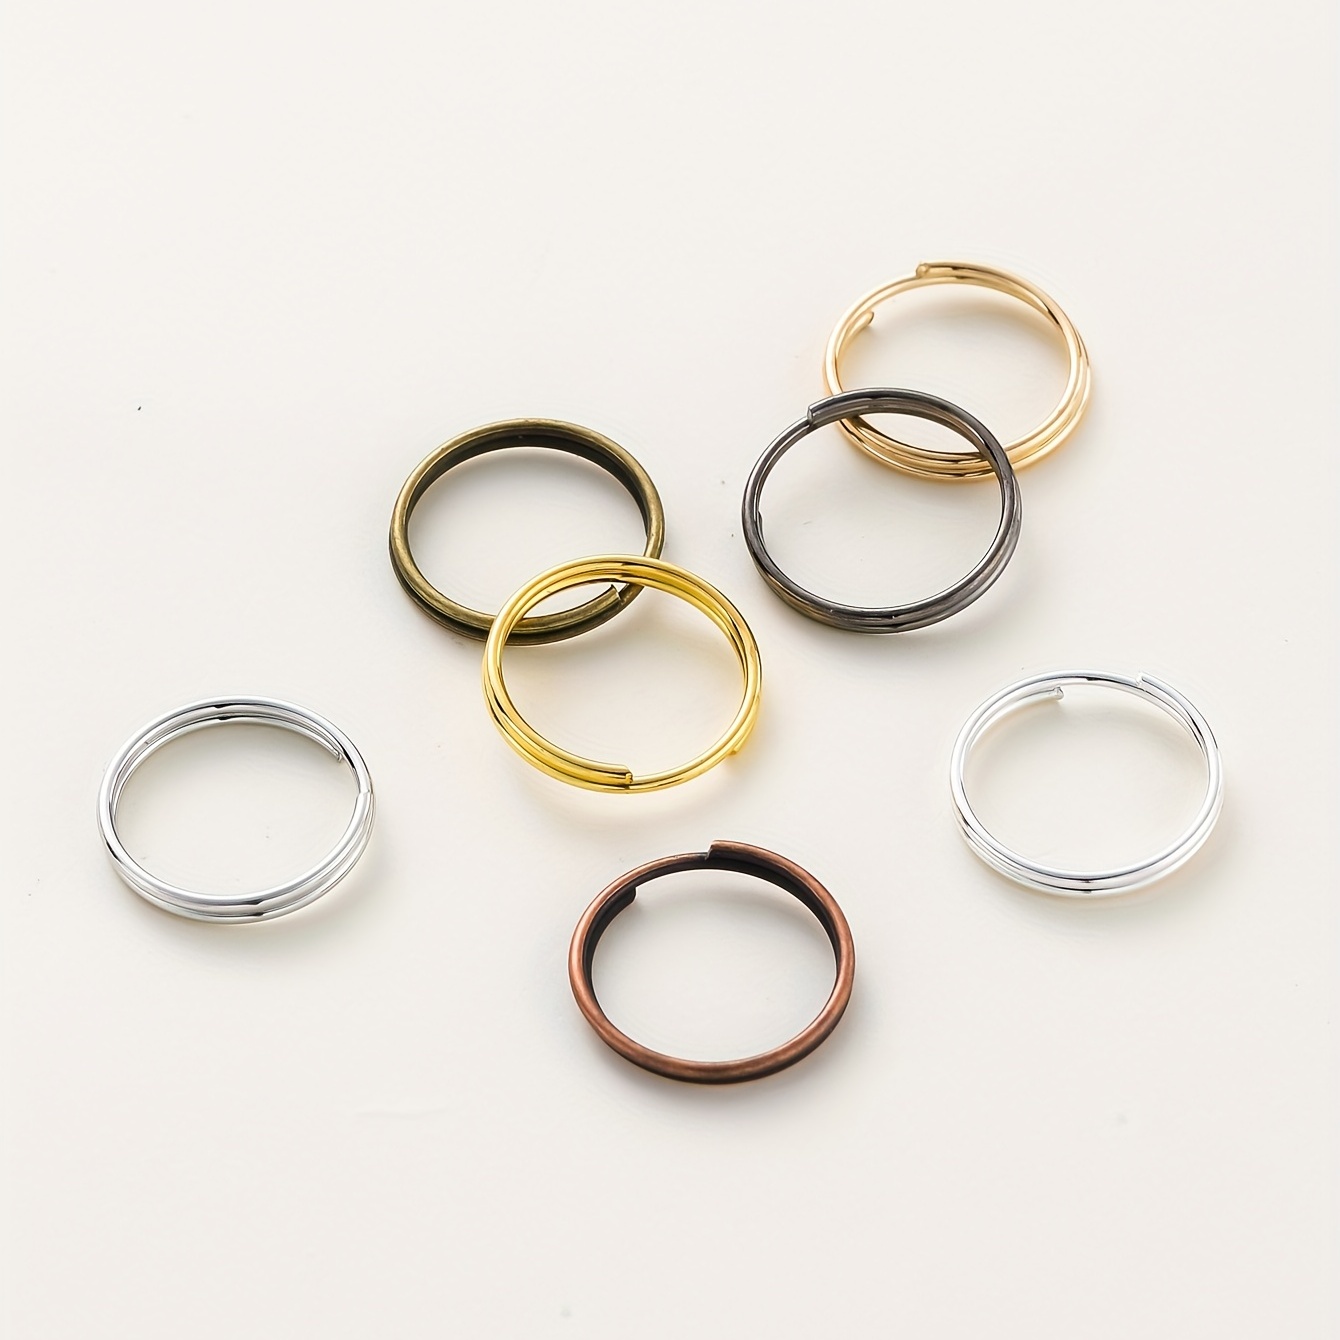 200pcs Gun Black Double Jump Rings Metal Open Jump Rings Split Ring Keyring Connectors for DIY Bracelet Necklace Earring Jewelry Making Supplies